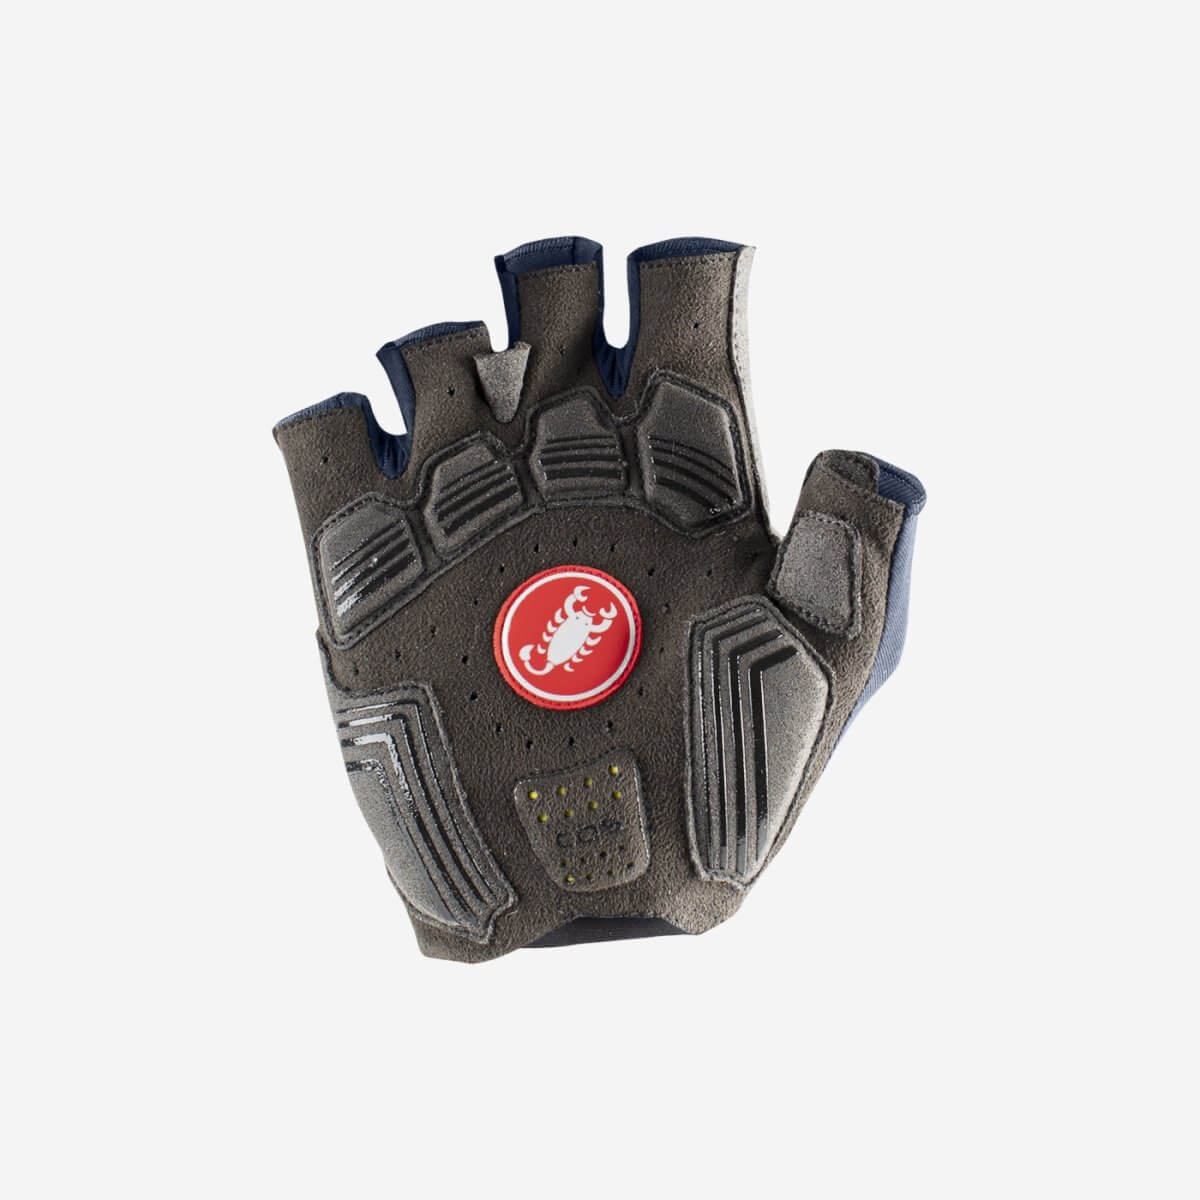 Castelli Endurance Men's Cycling Gloves (Belgian Blue)